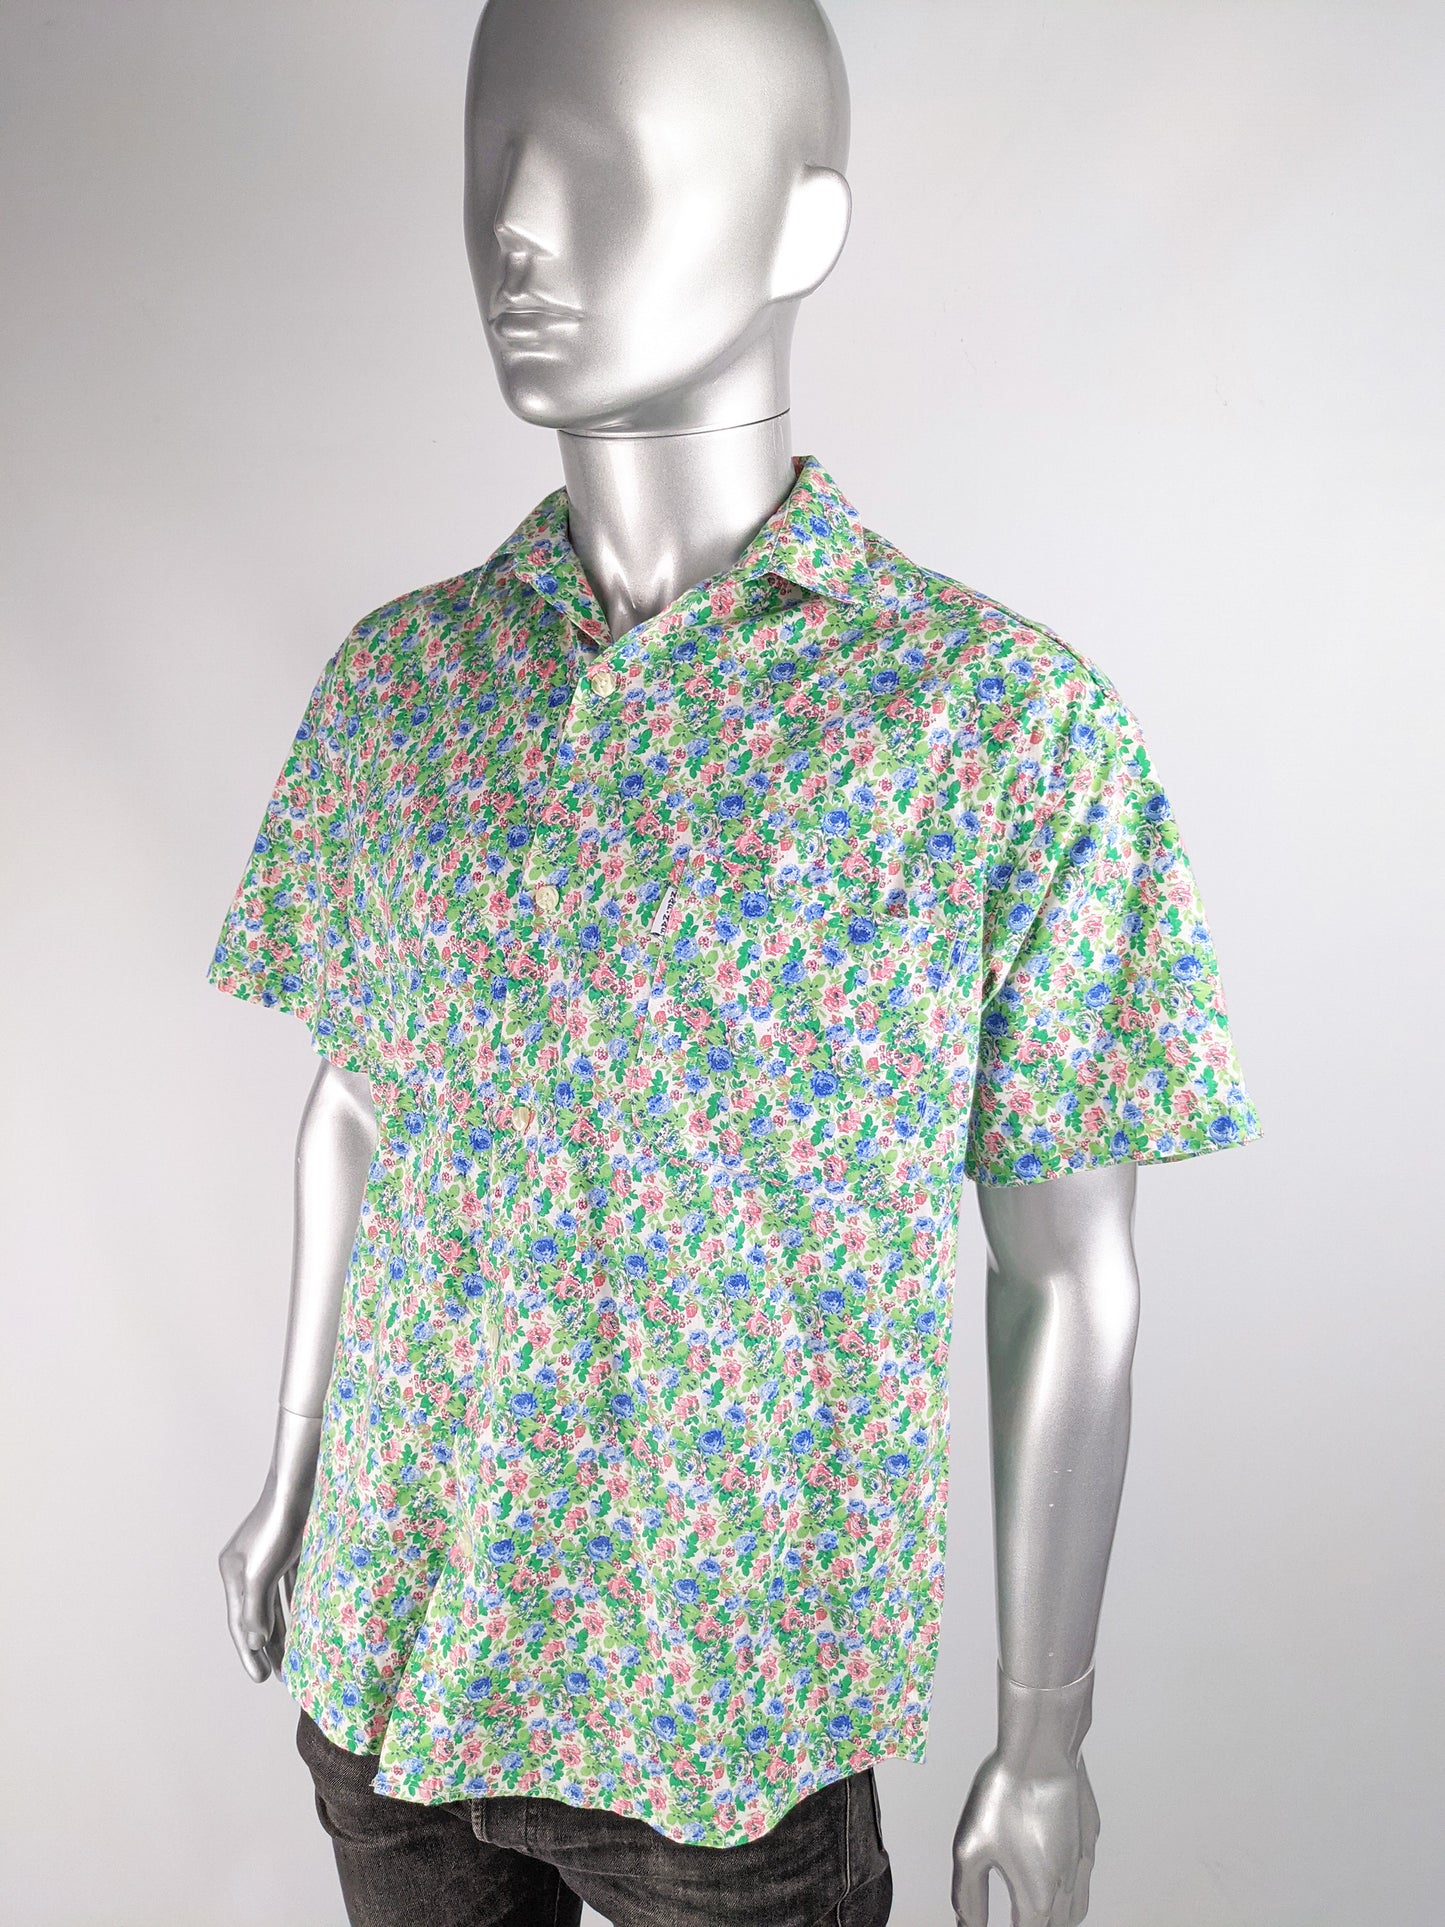 Mens Vintage Short Sleeve Floral Cotton Shirt, 1990s